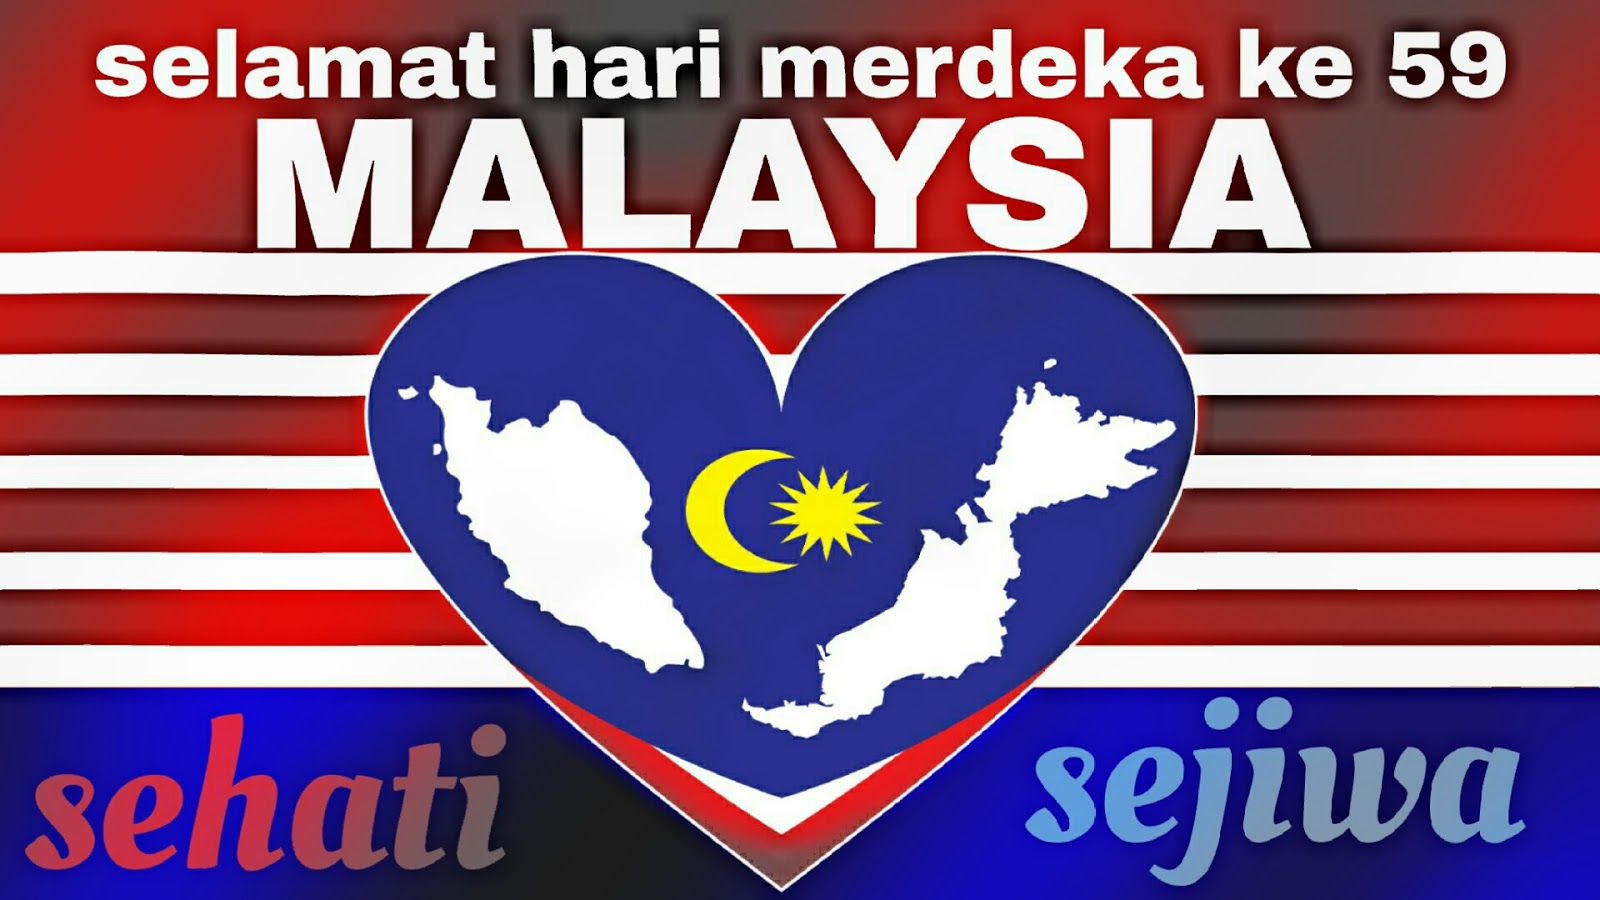 Selamat hari kemerdekaan Malaysia ke 59 tahun ~ SentapBrow